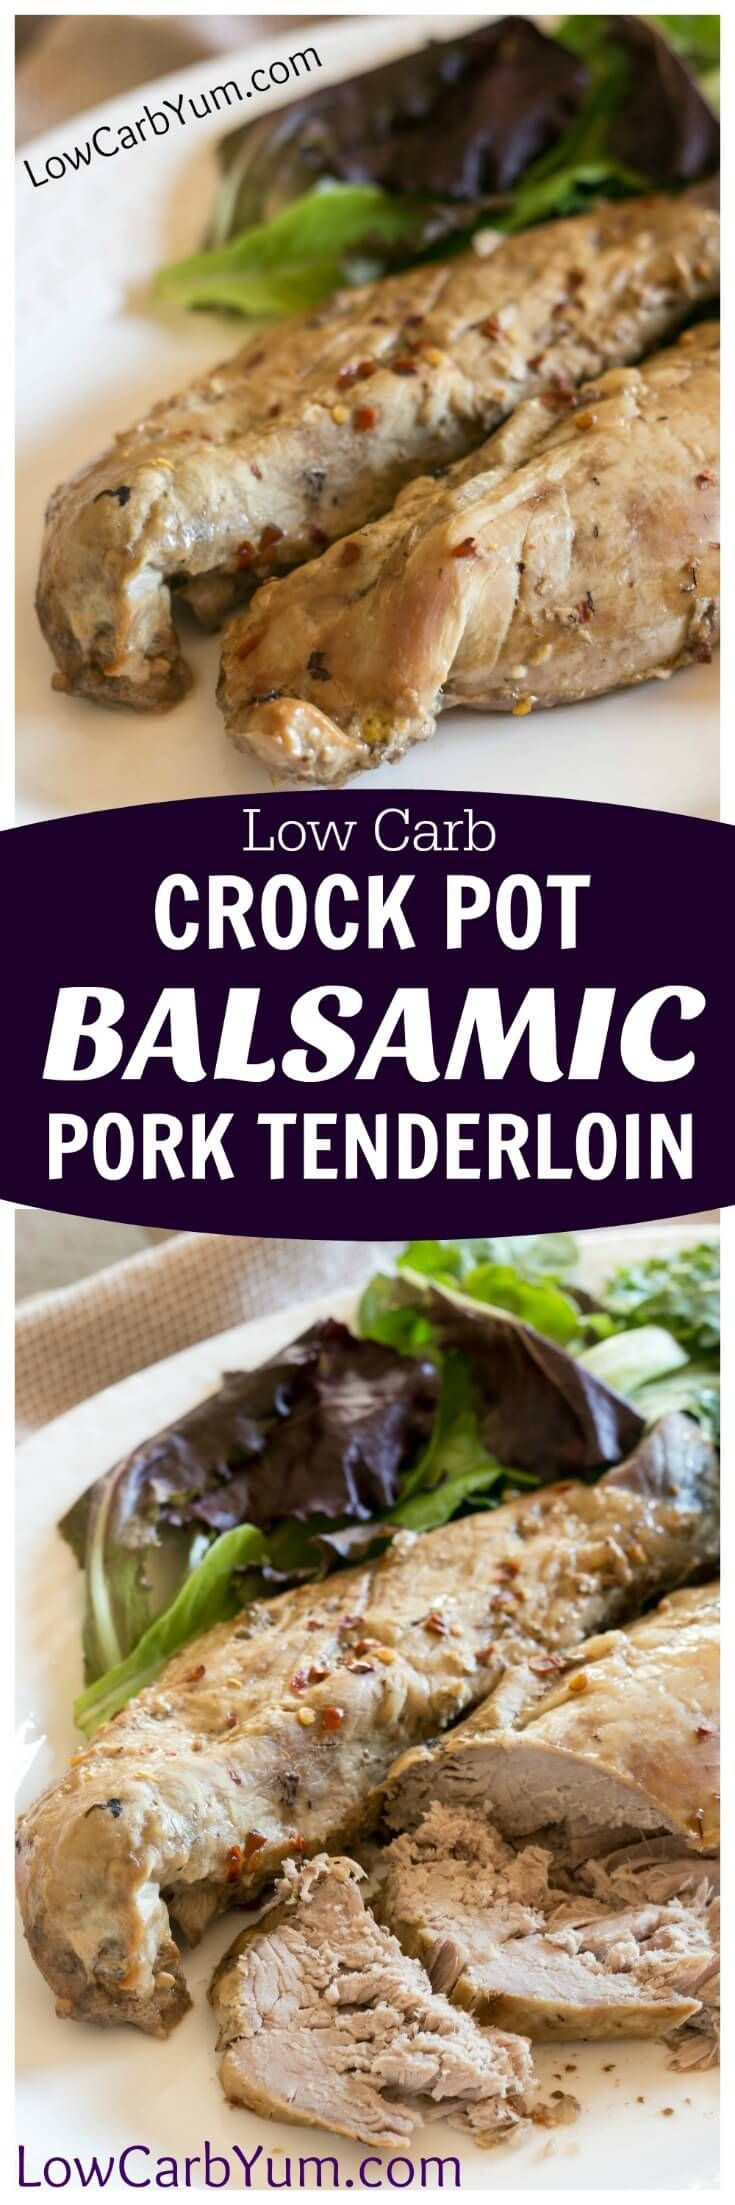 Pork Tenderloin Recipes In Crockpot Slow Cooker Keto
 A crock pot balsamic pork tenderloin that can be prepared